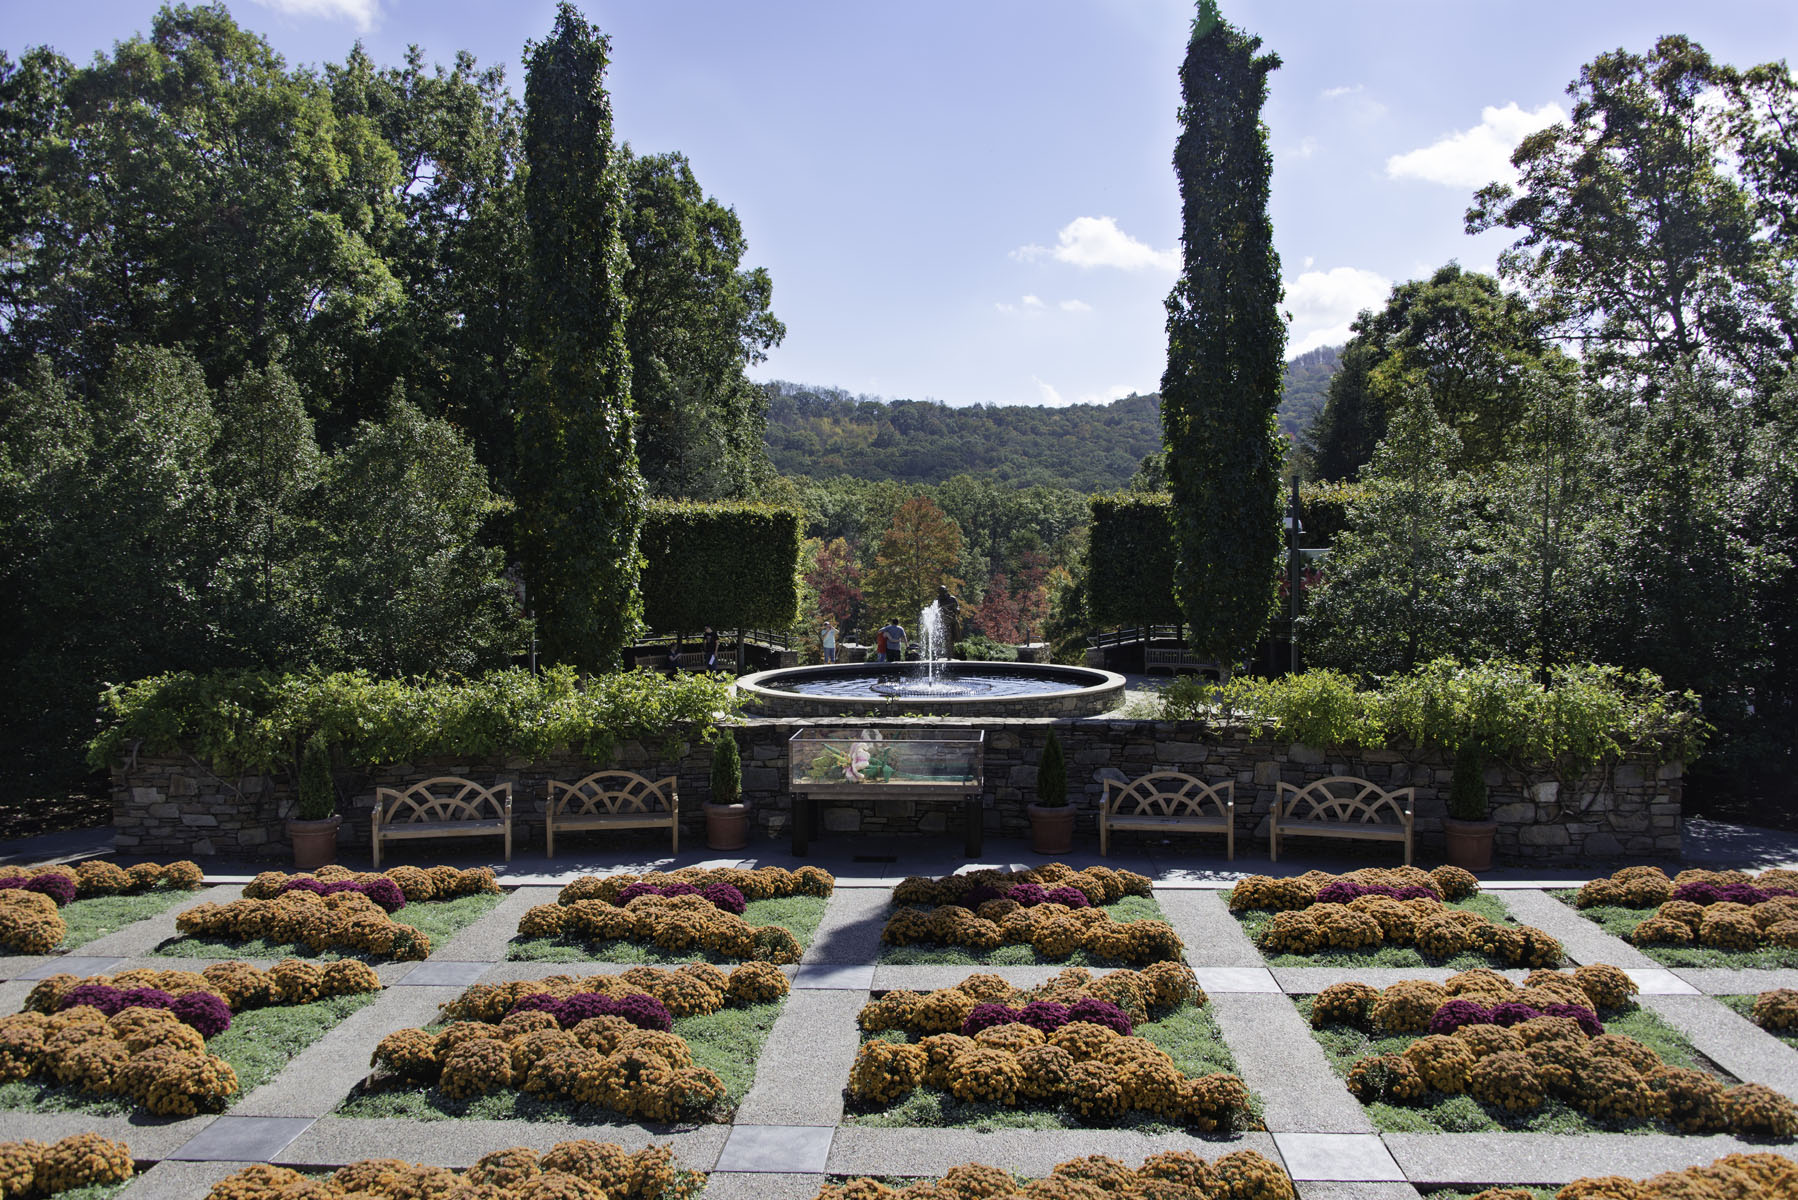 Formal Garden at the North Carolina Arboretum